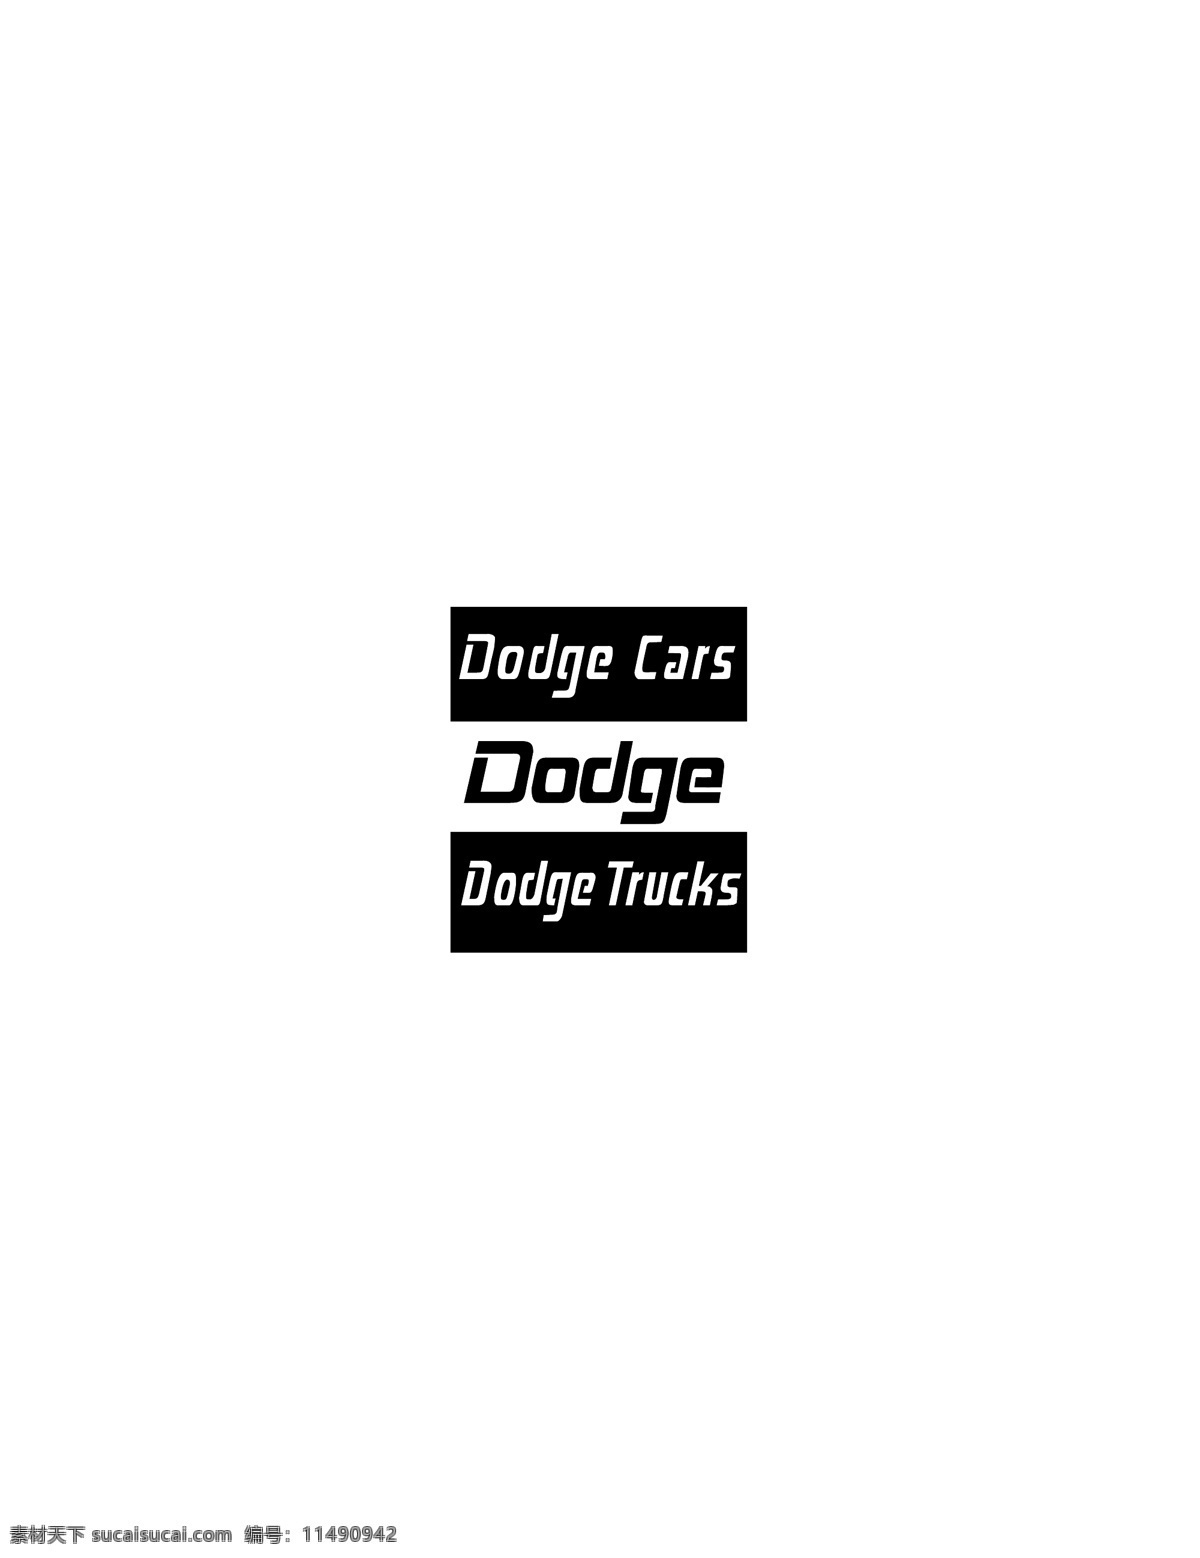 dodge logo大全 logo 设计欣赏 商业矢量 矢量下载 矢量 汽车 标志 标志设计 欣赏 网页矢量 矢量图 其他矢量图